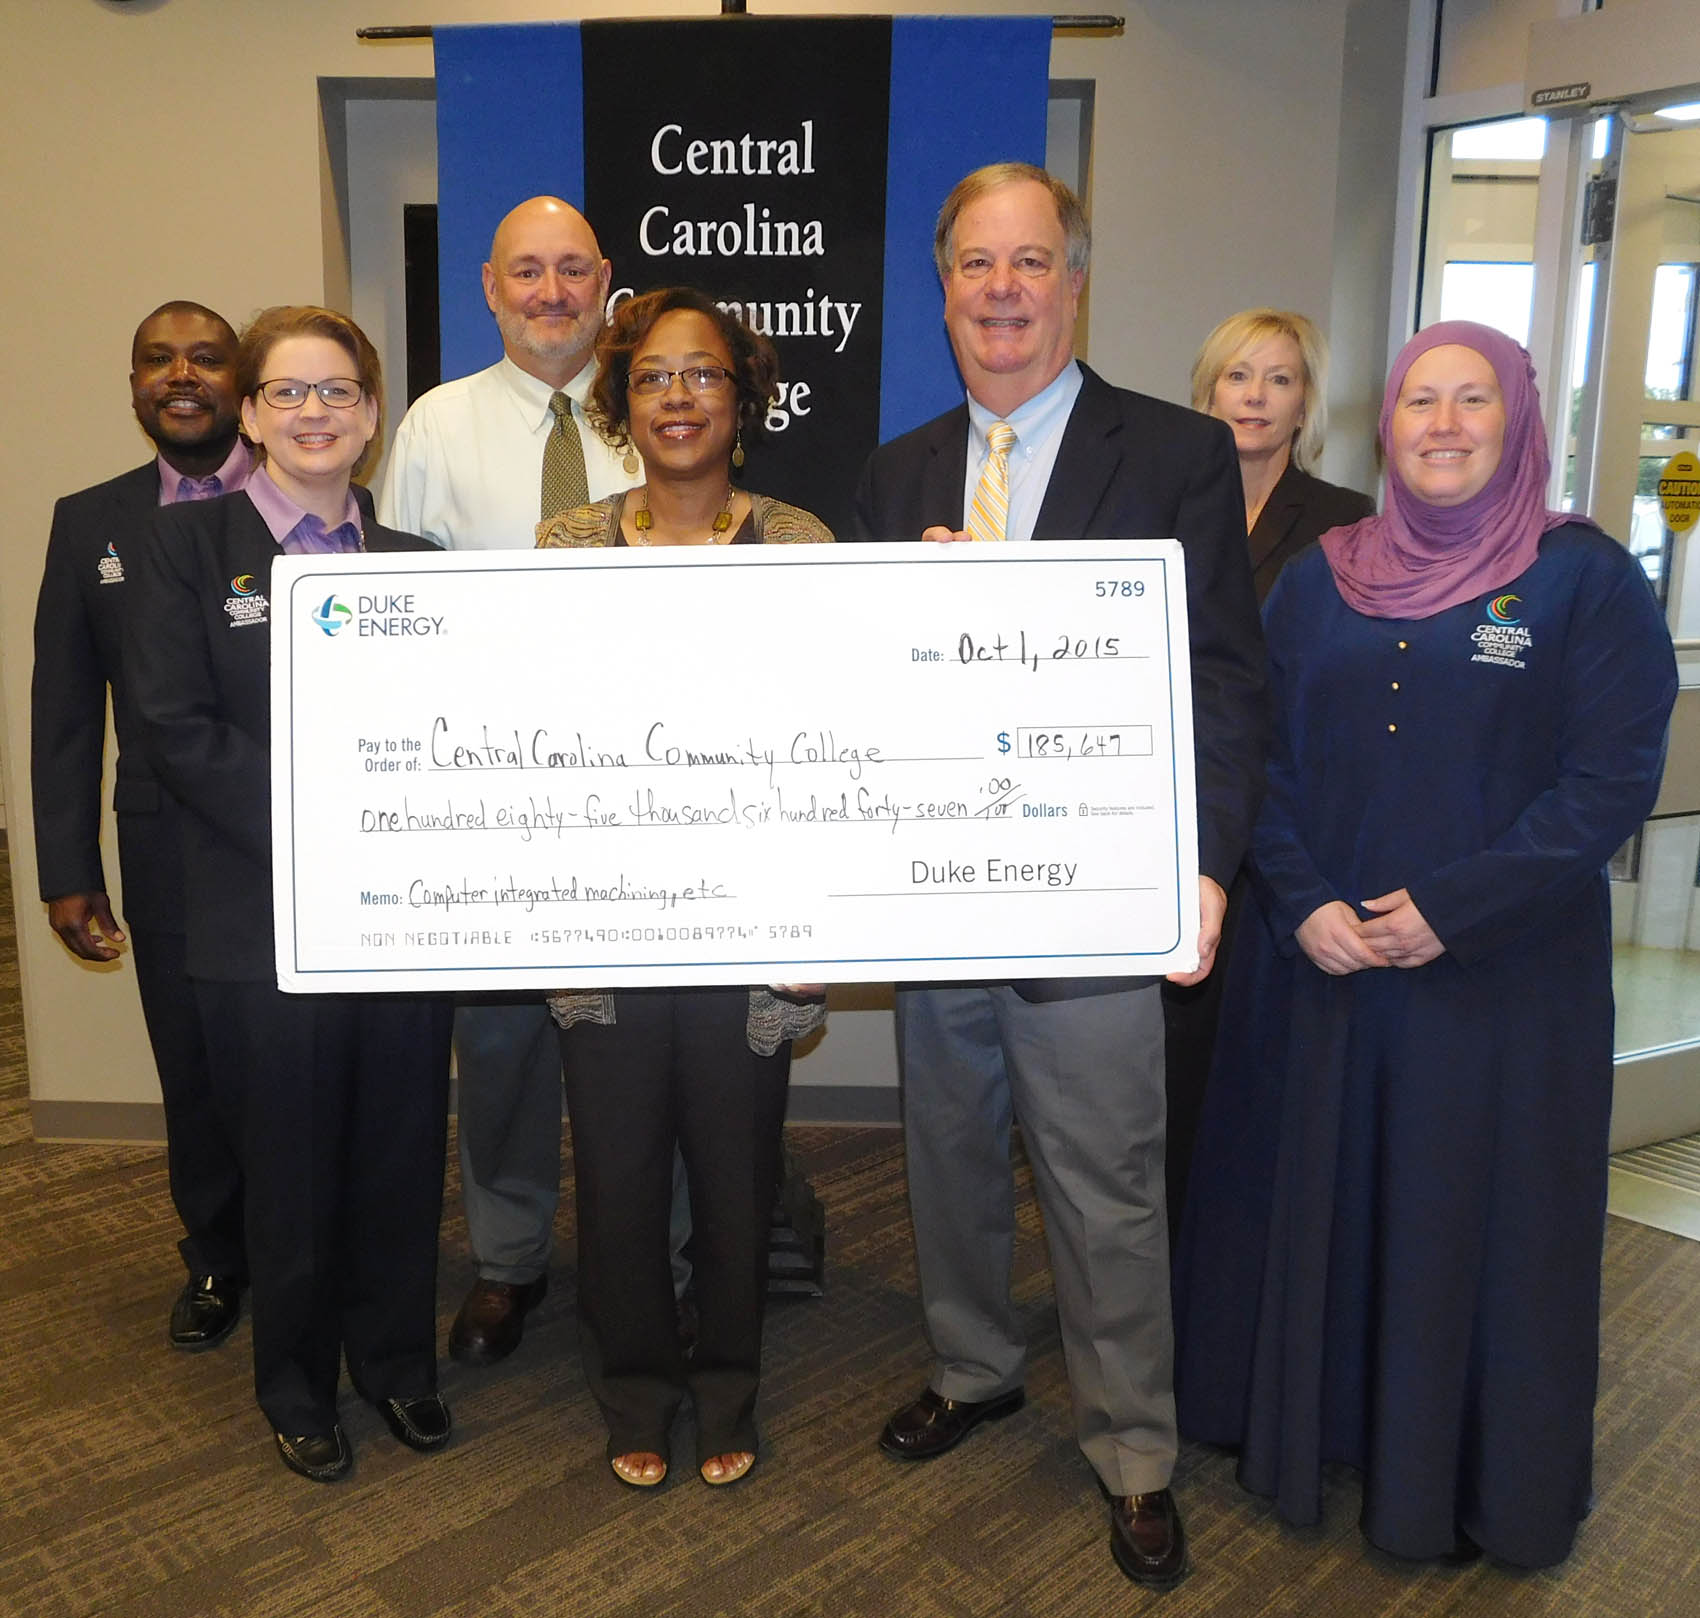 Duke Energy awards $185,647 to Central Carolina Community College